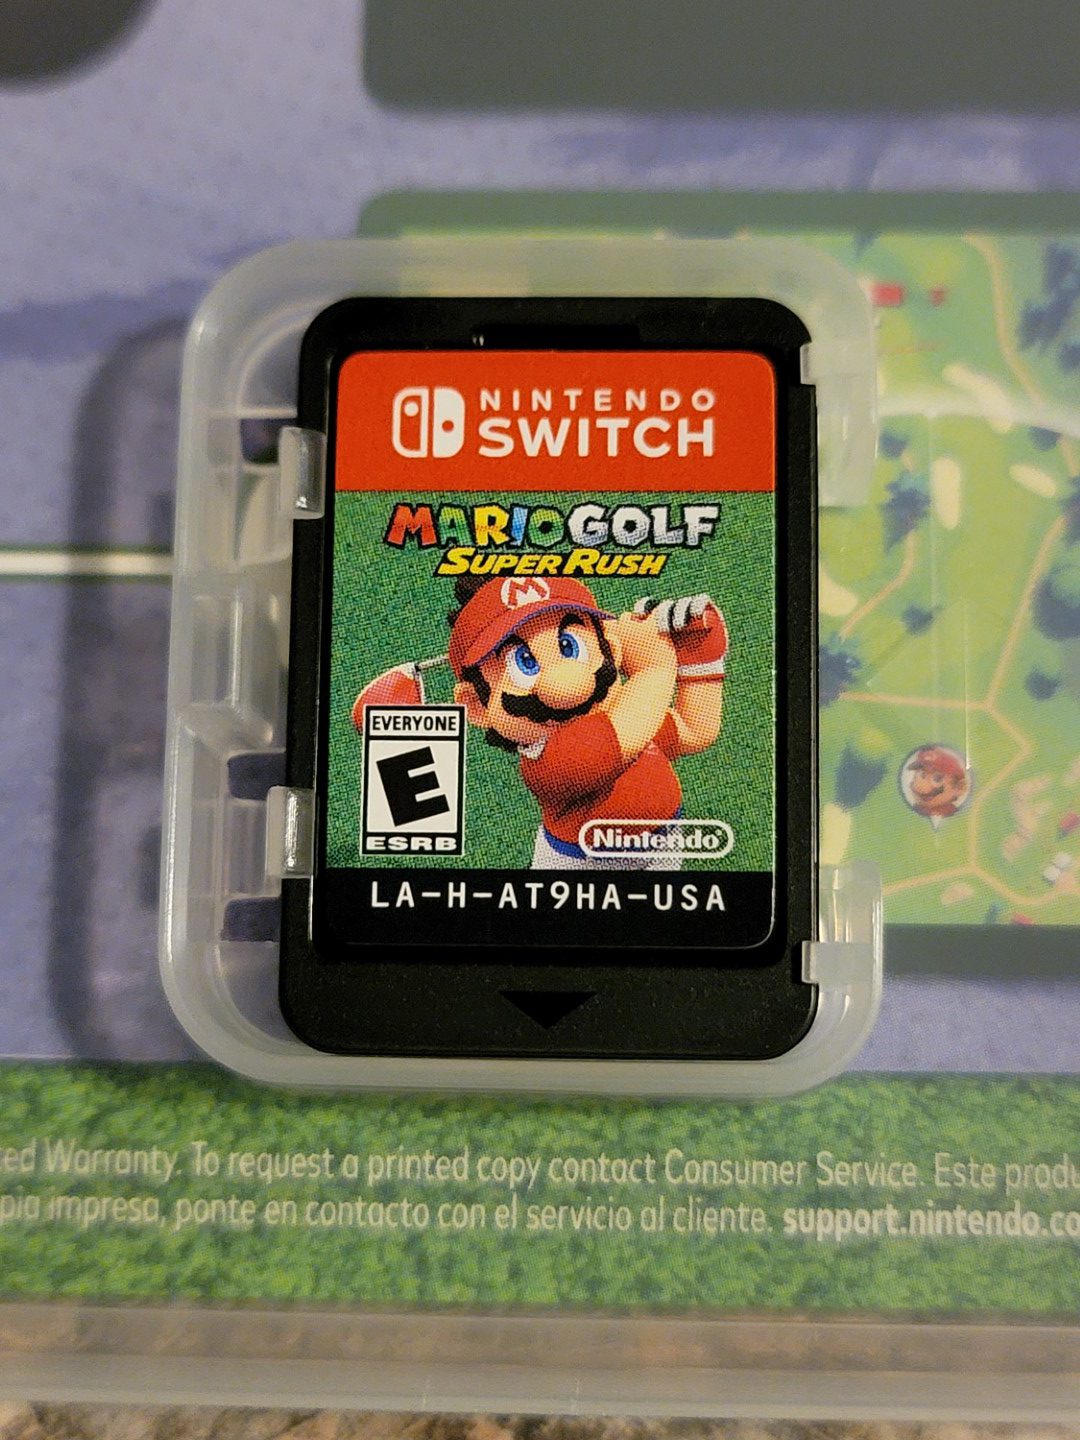 Mario Golf Super Rush Nintendo Switch - Cartridge inside the box